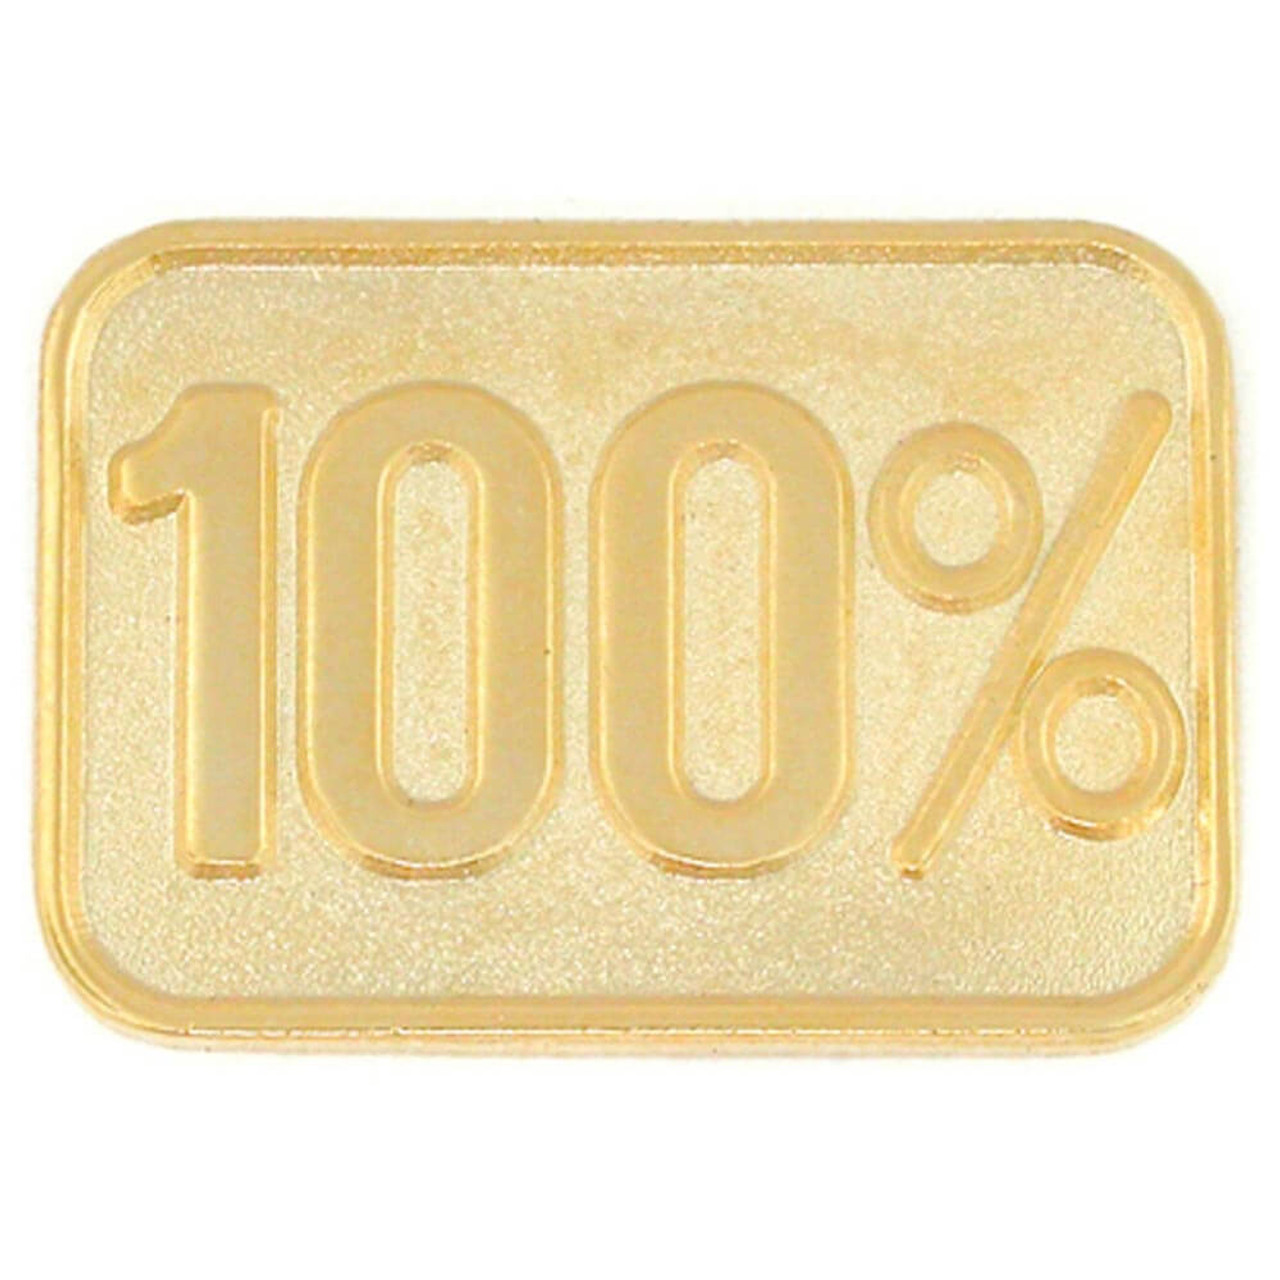 PrintGlobe 100 Custom Round Magnetic Lapel Pins - Gold